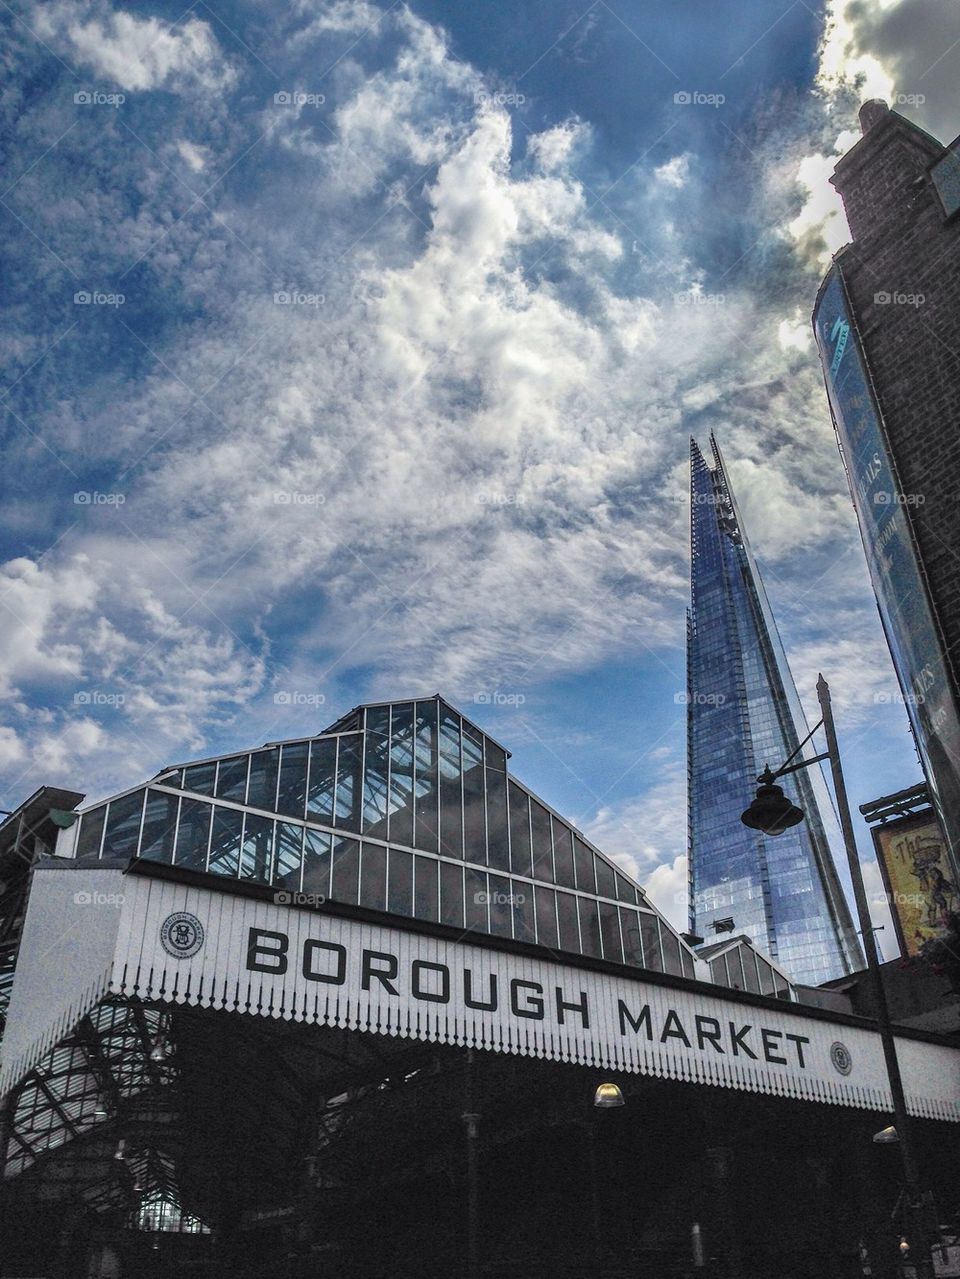 Borough market London 